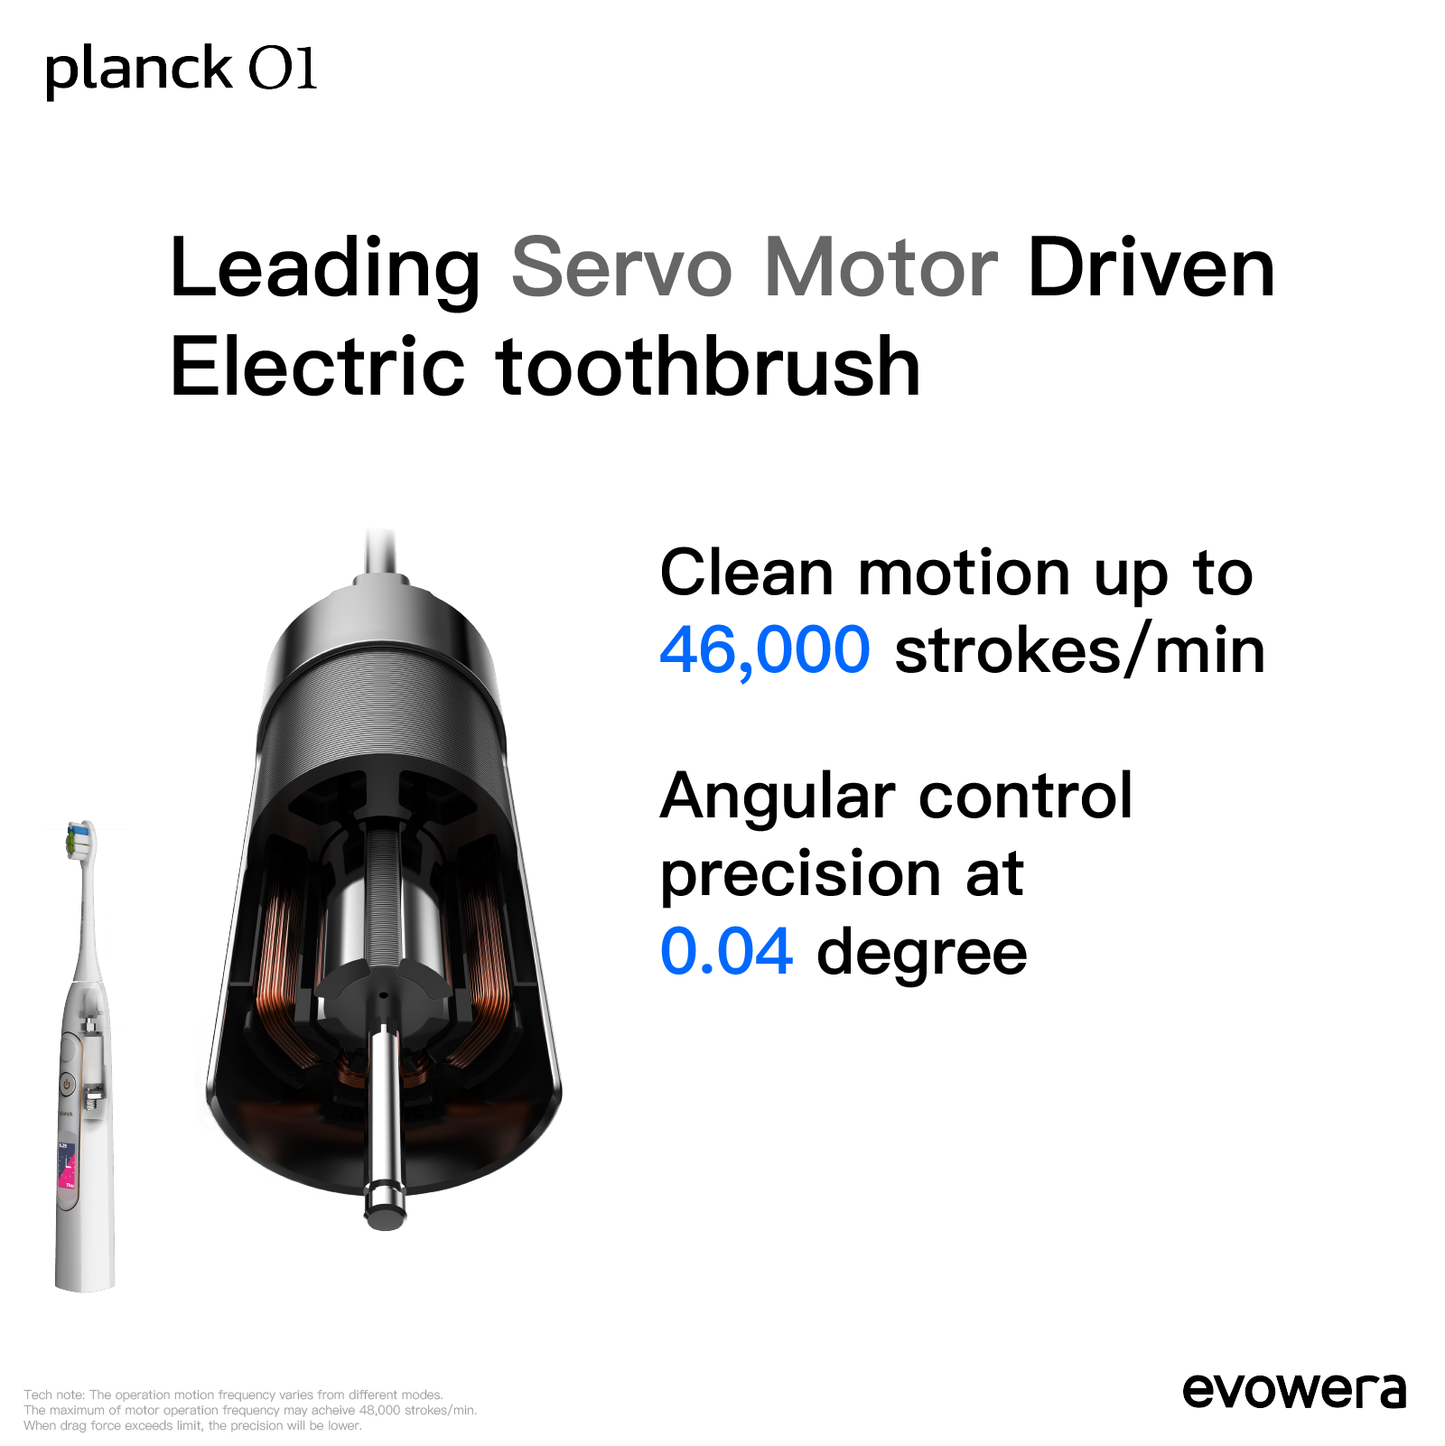 planck O1 Leading Servo Motor Driven Electric Toothbrush